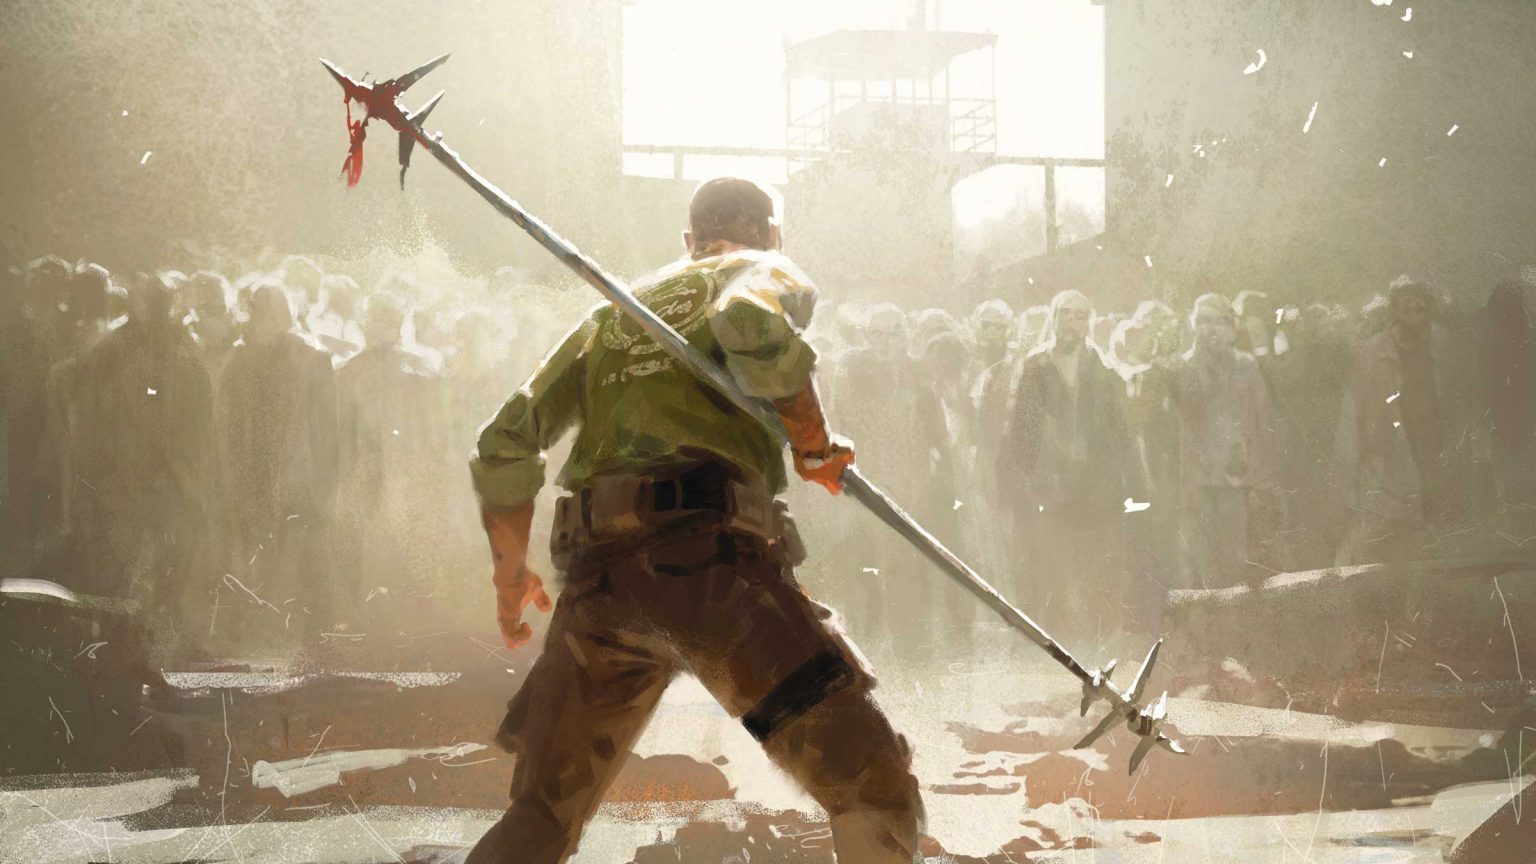 Tomb Raider e Walking Dead: veja melhores jogos de aventura para